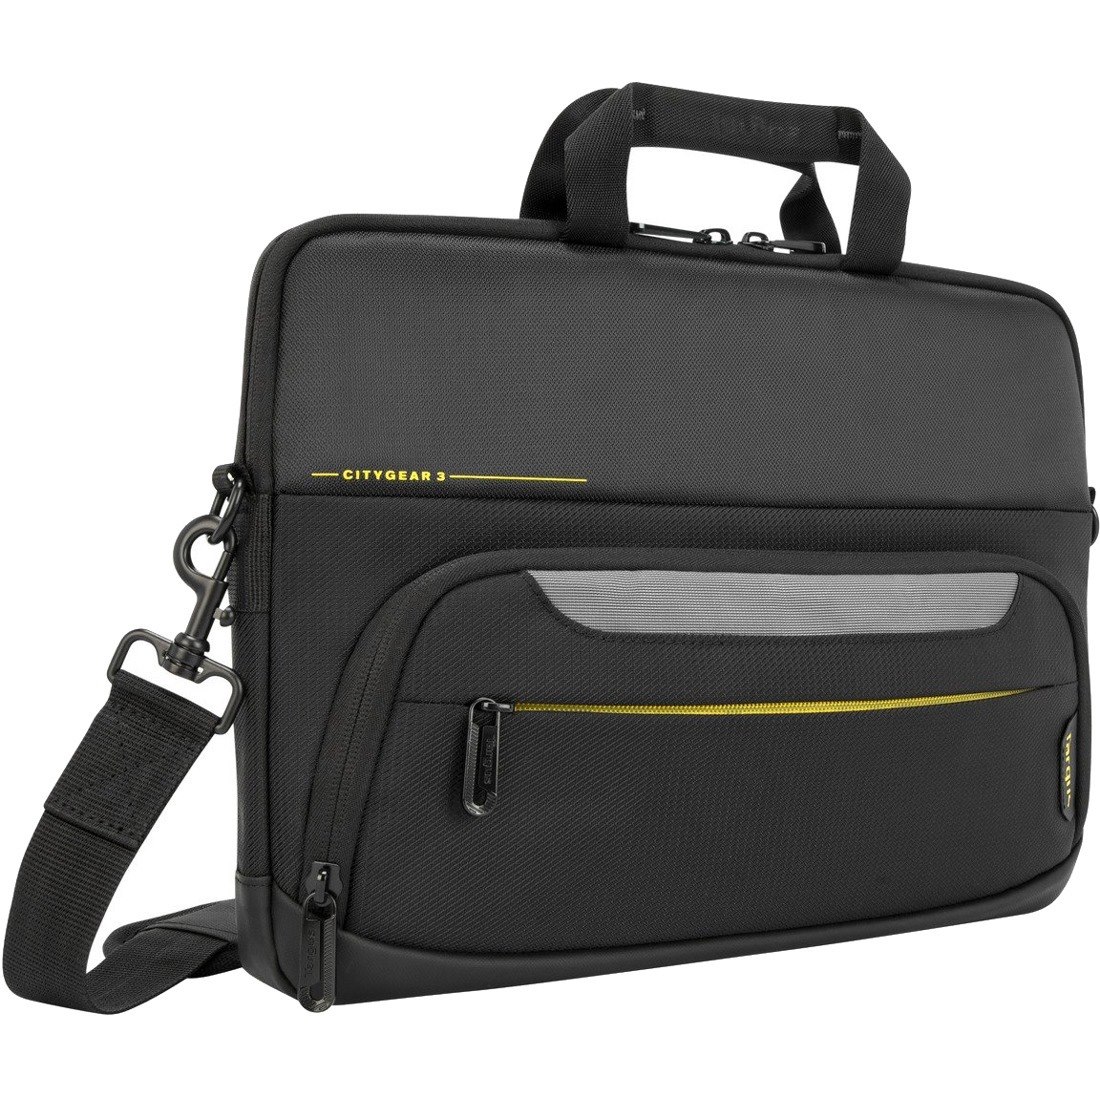 Targus City Gear TSS866GL Carrying Case for 14" Notebook - Black